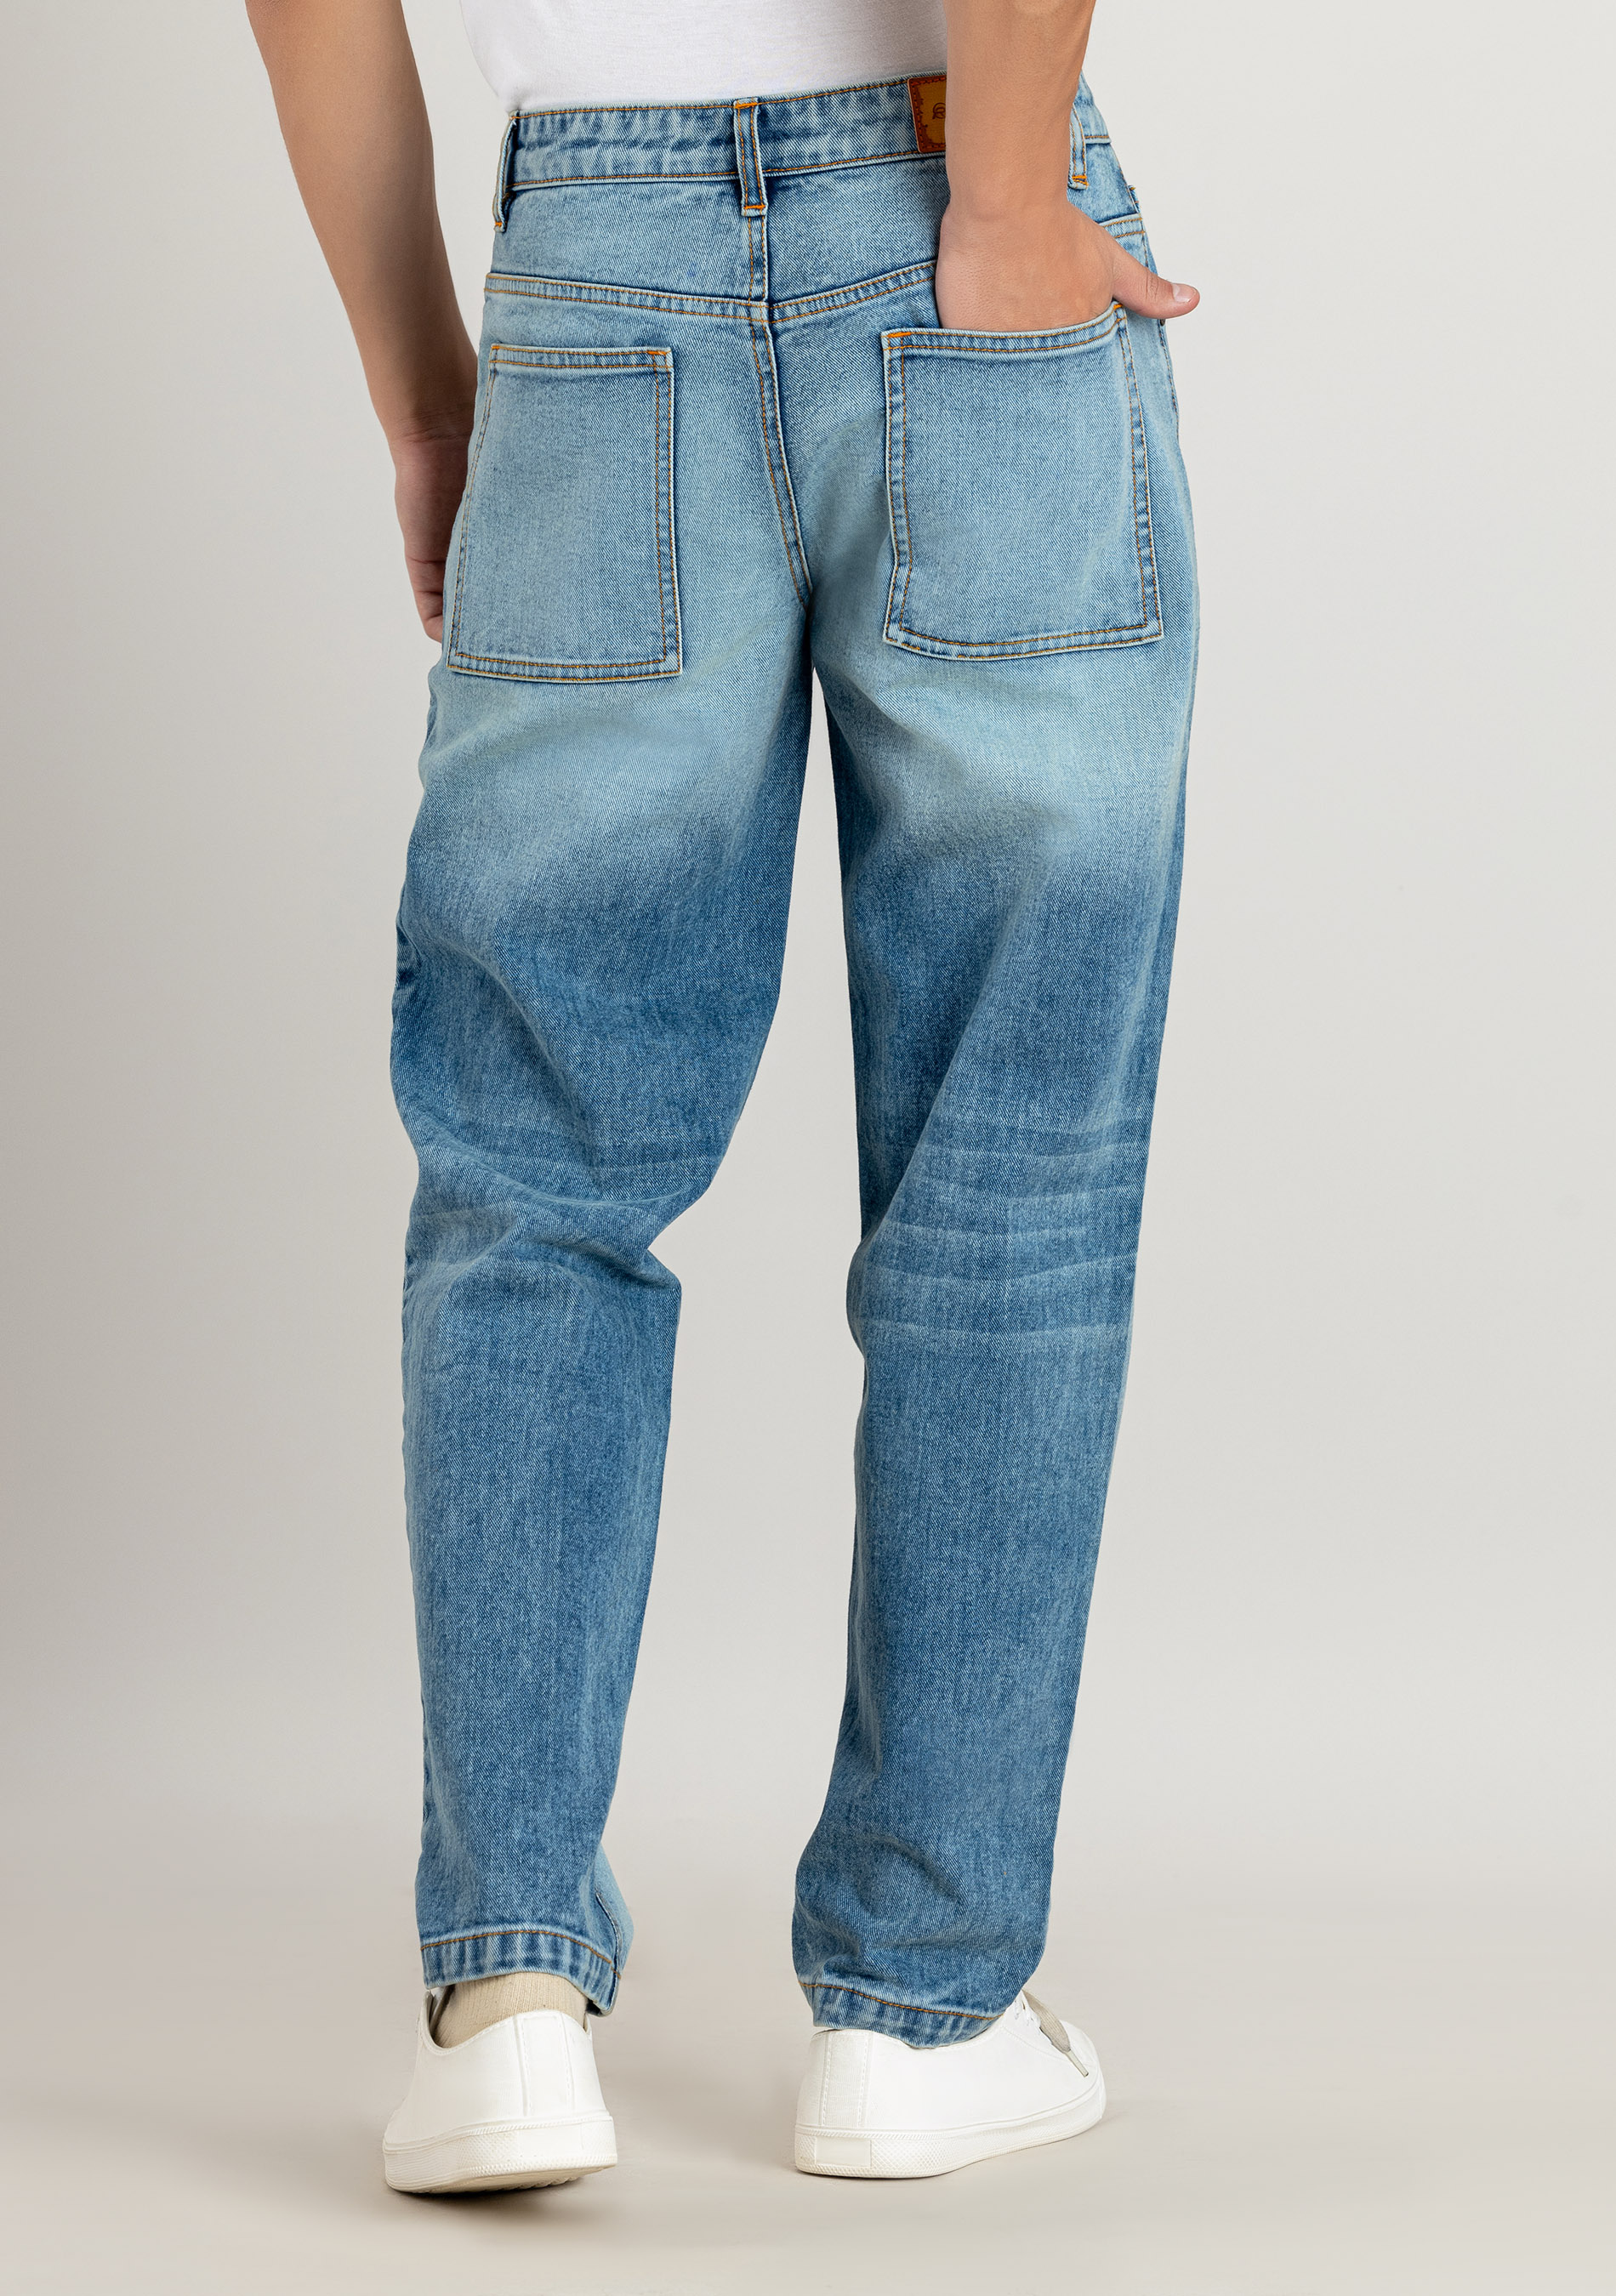 Blue Straight Fit Men's Jeans - Buy Online in India @ Mehar